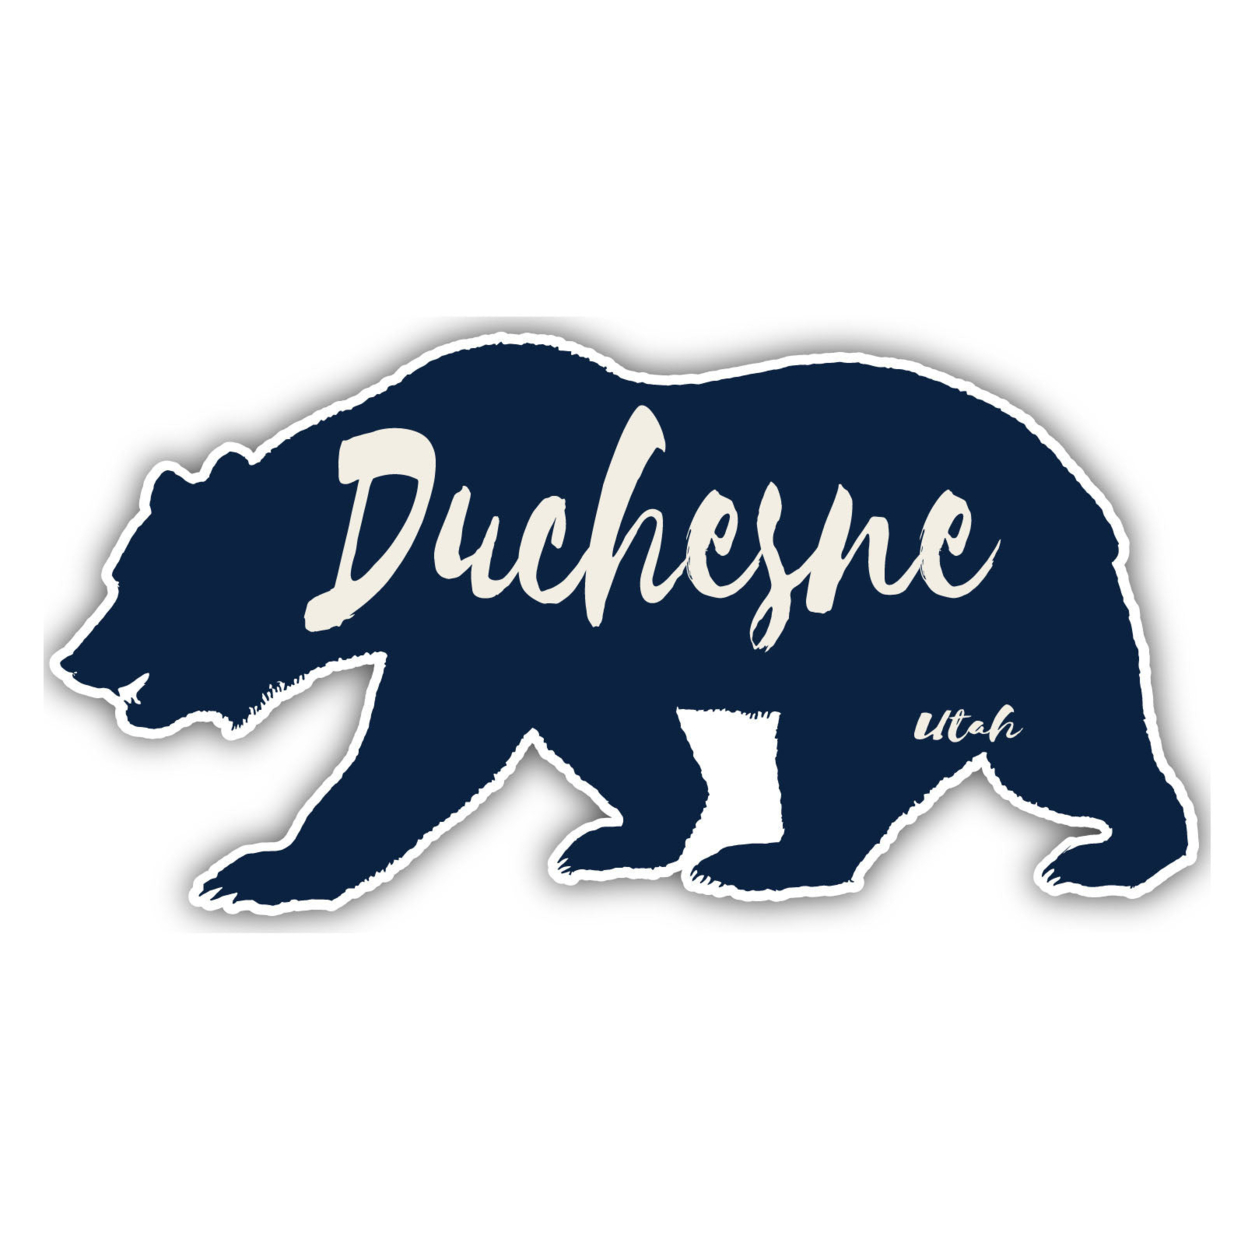 Duchesne Utah Souvenir Decorative Stickers (Choose Theme And Size) - Single Unit, 6-Inch, Bear